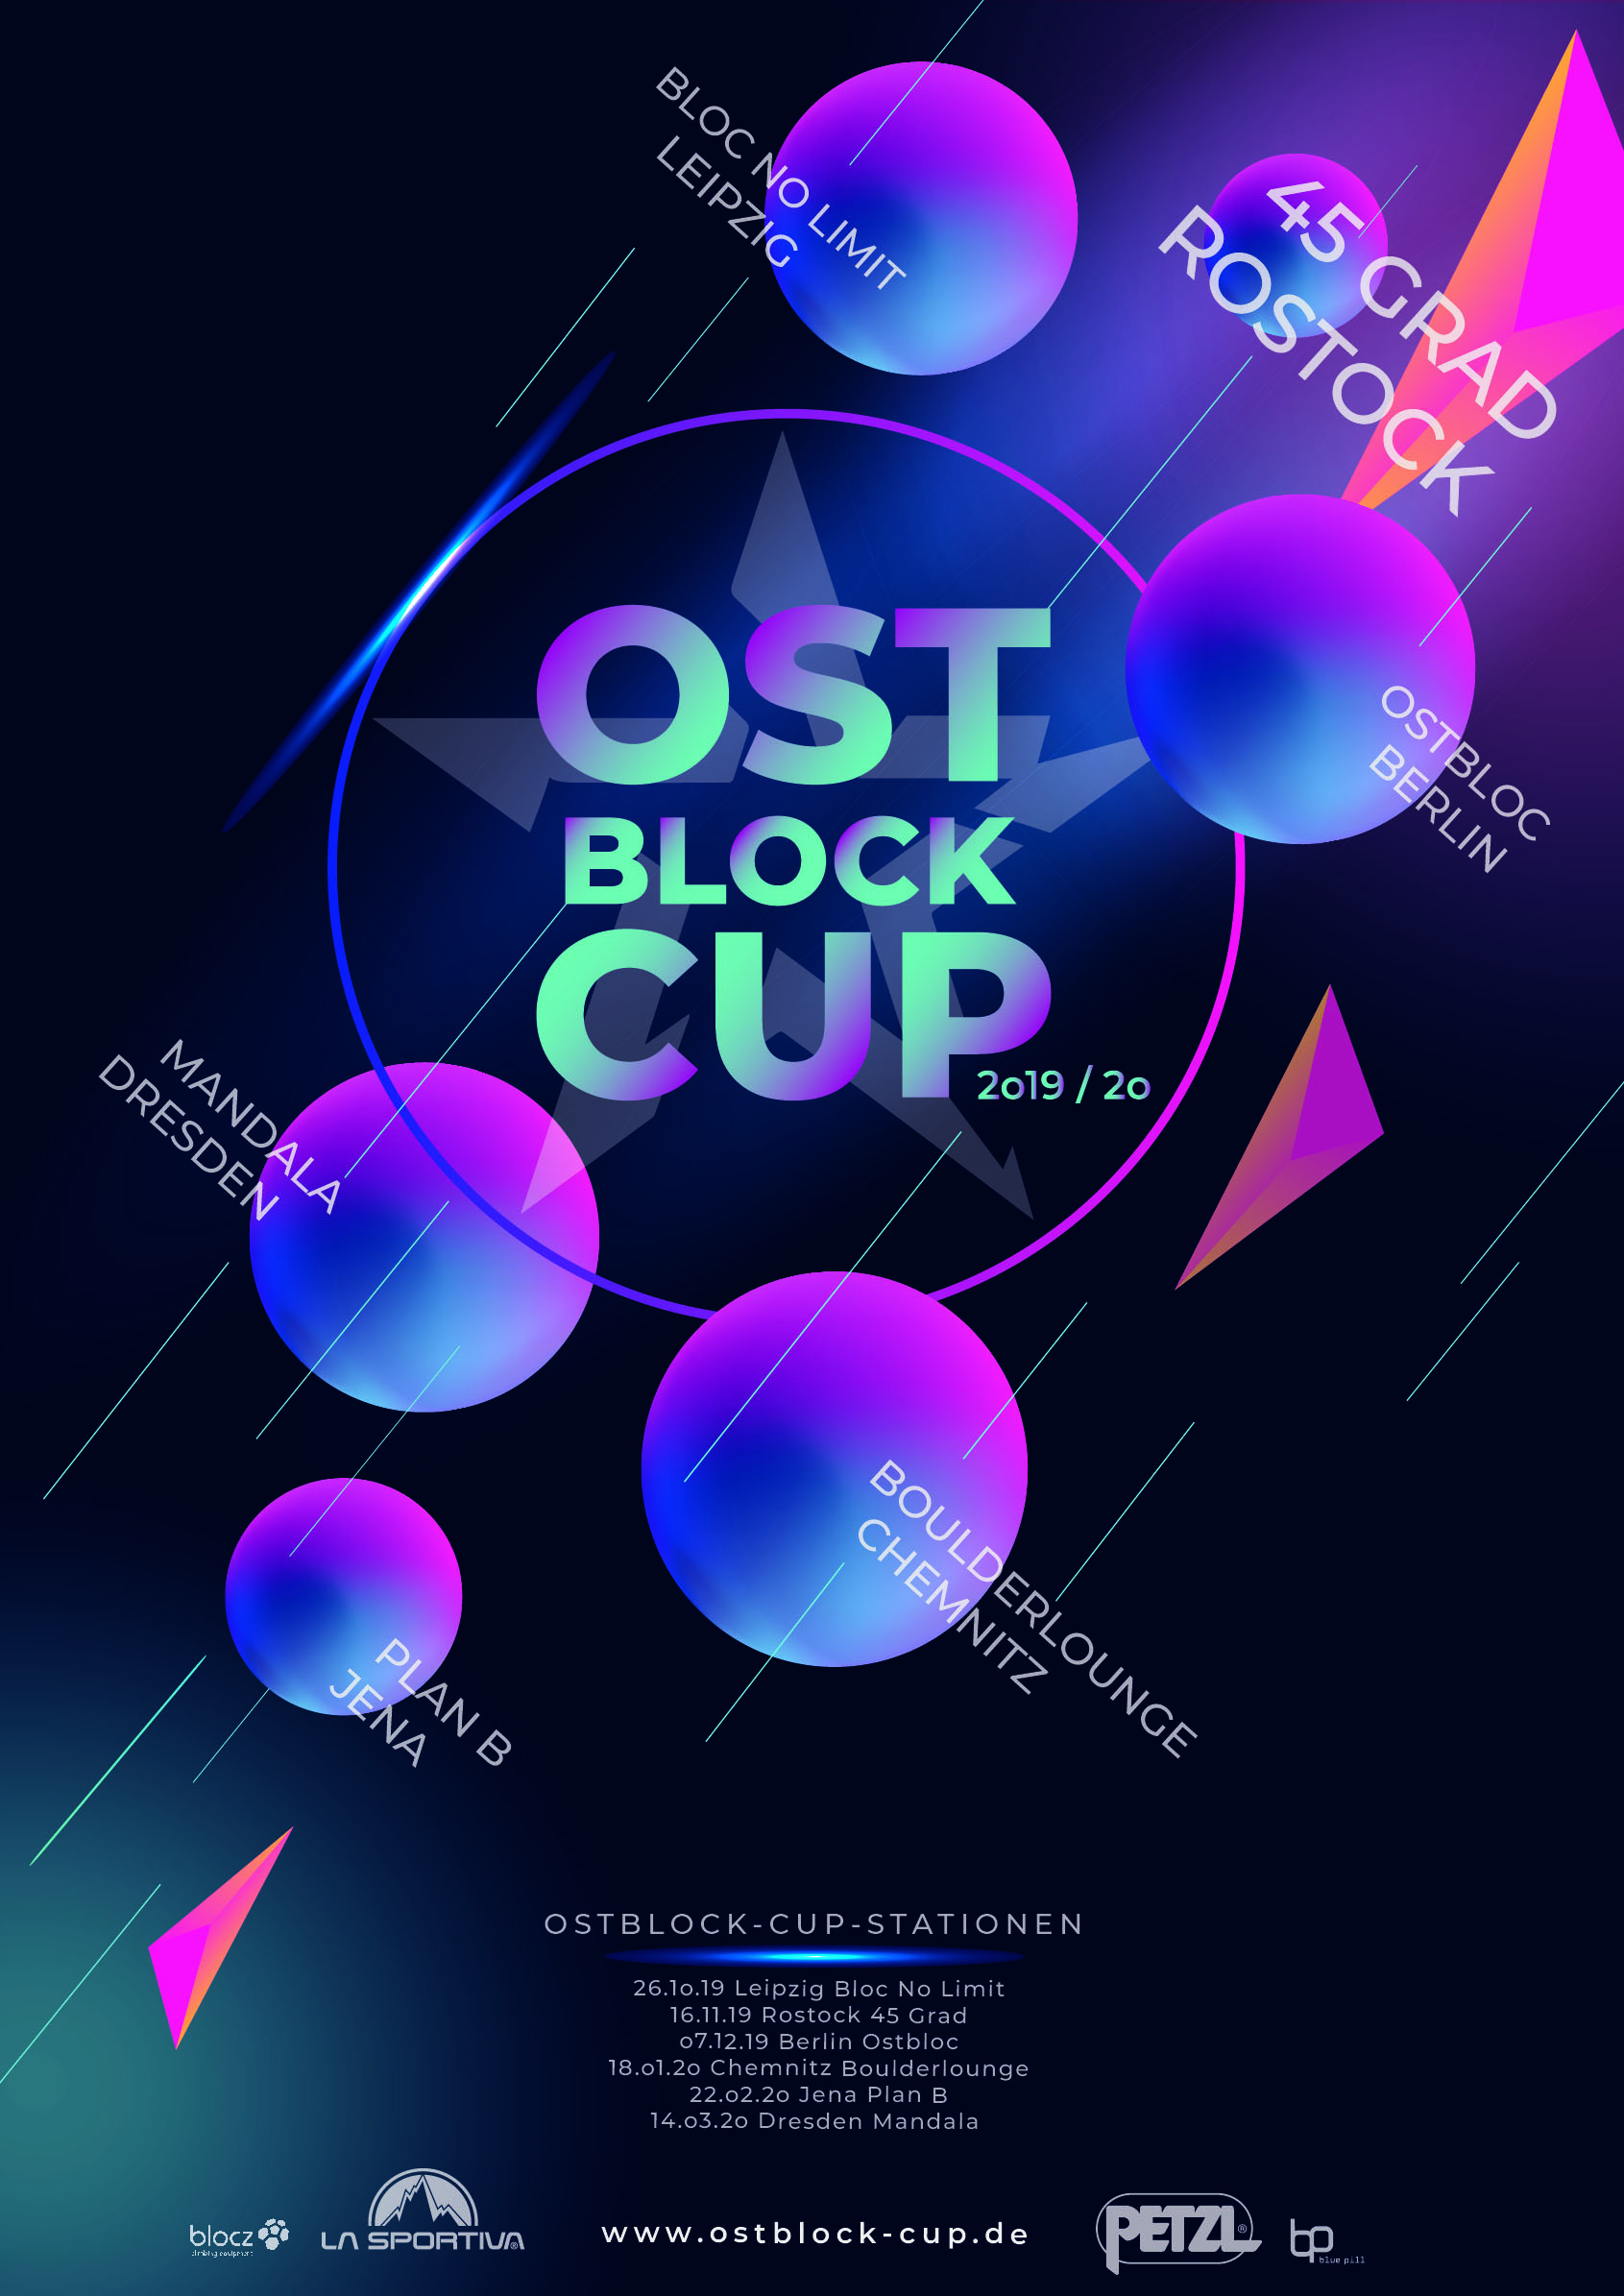 Poster for Ostbloc-Cup 2019/20 45 Grad